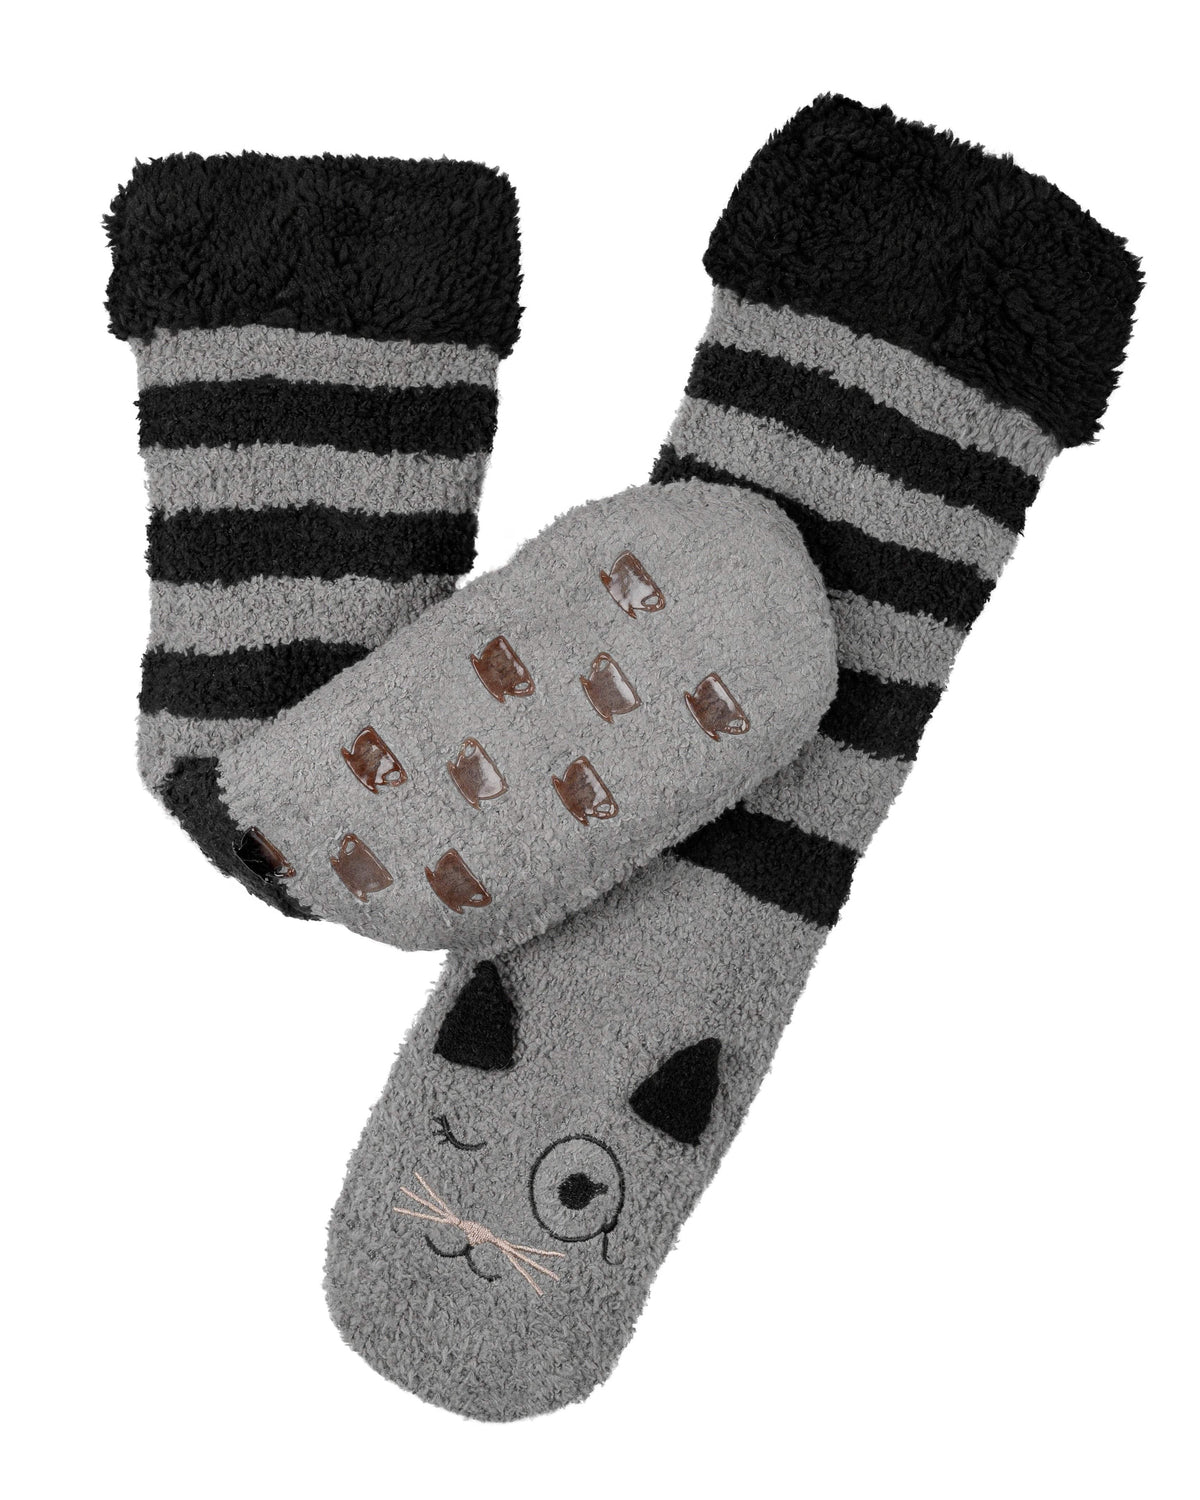 Marshmallow Critter Socks - Cat (Smoked Pearl & Black) - LATTELOVE Co.